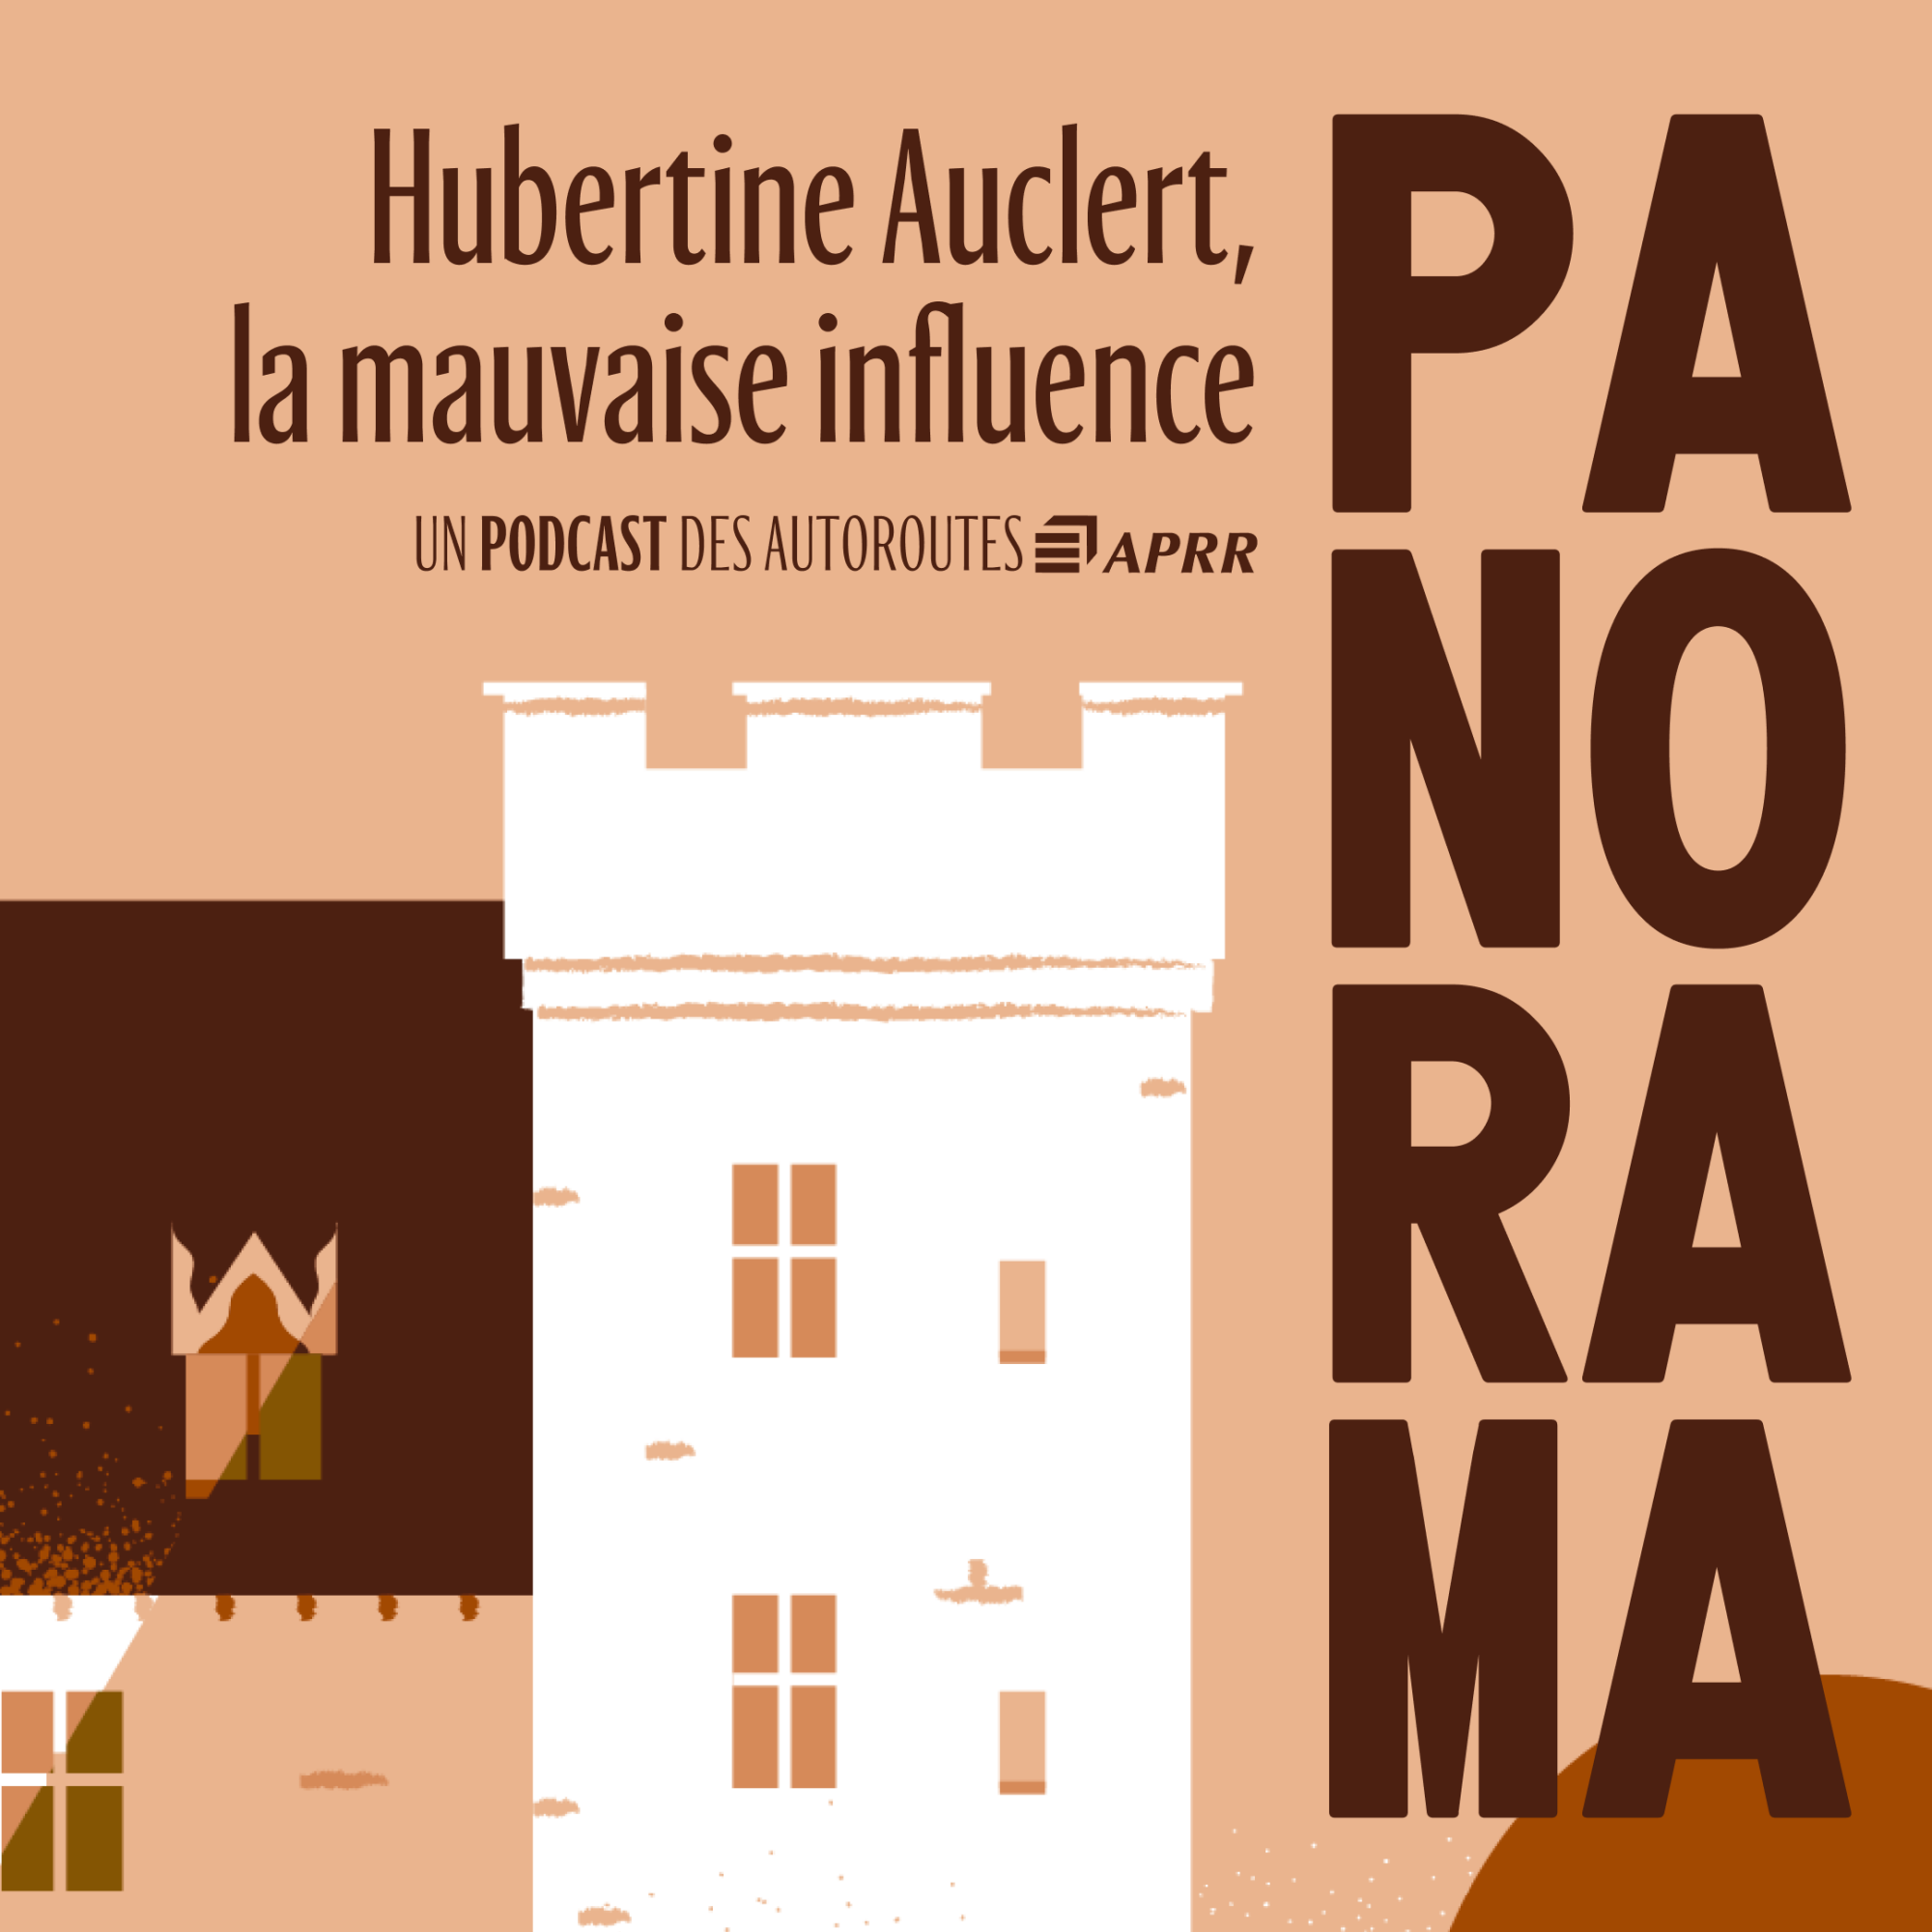 Hubertine Audert, la mauvaise influence